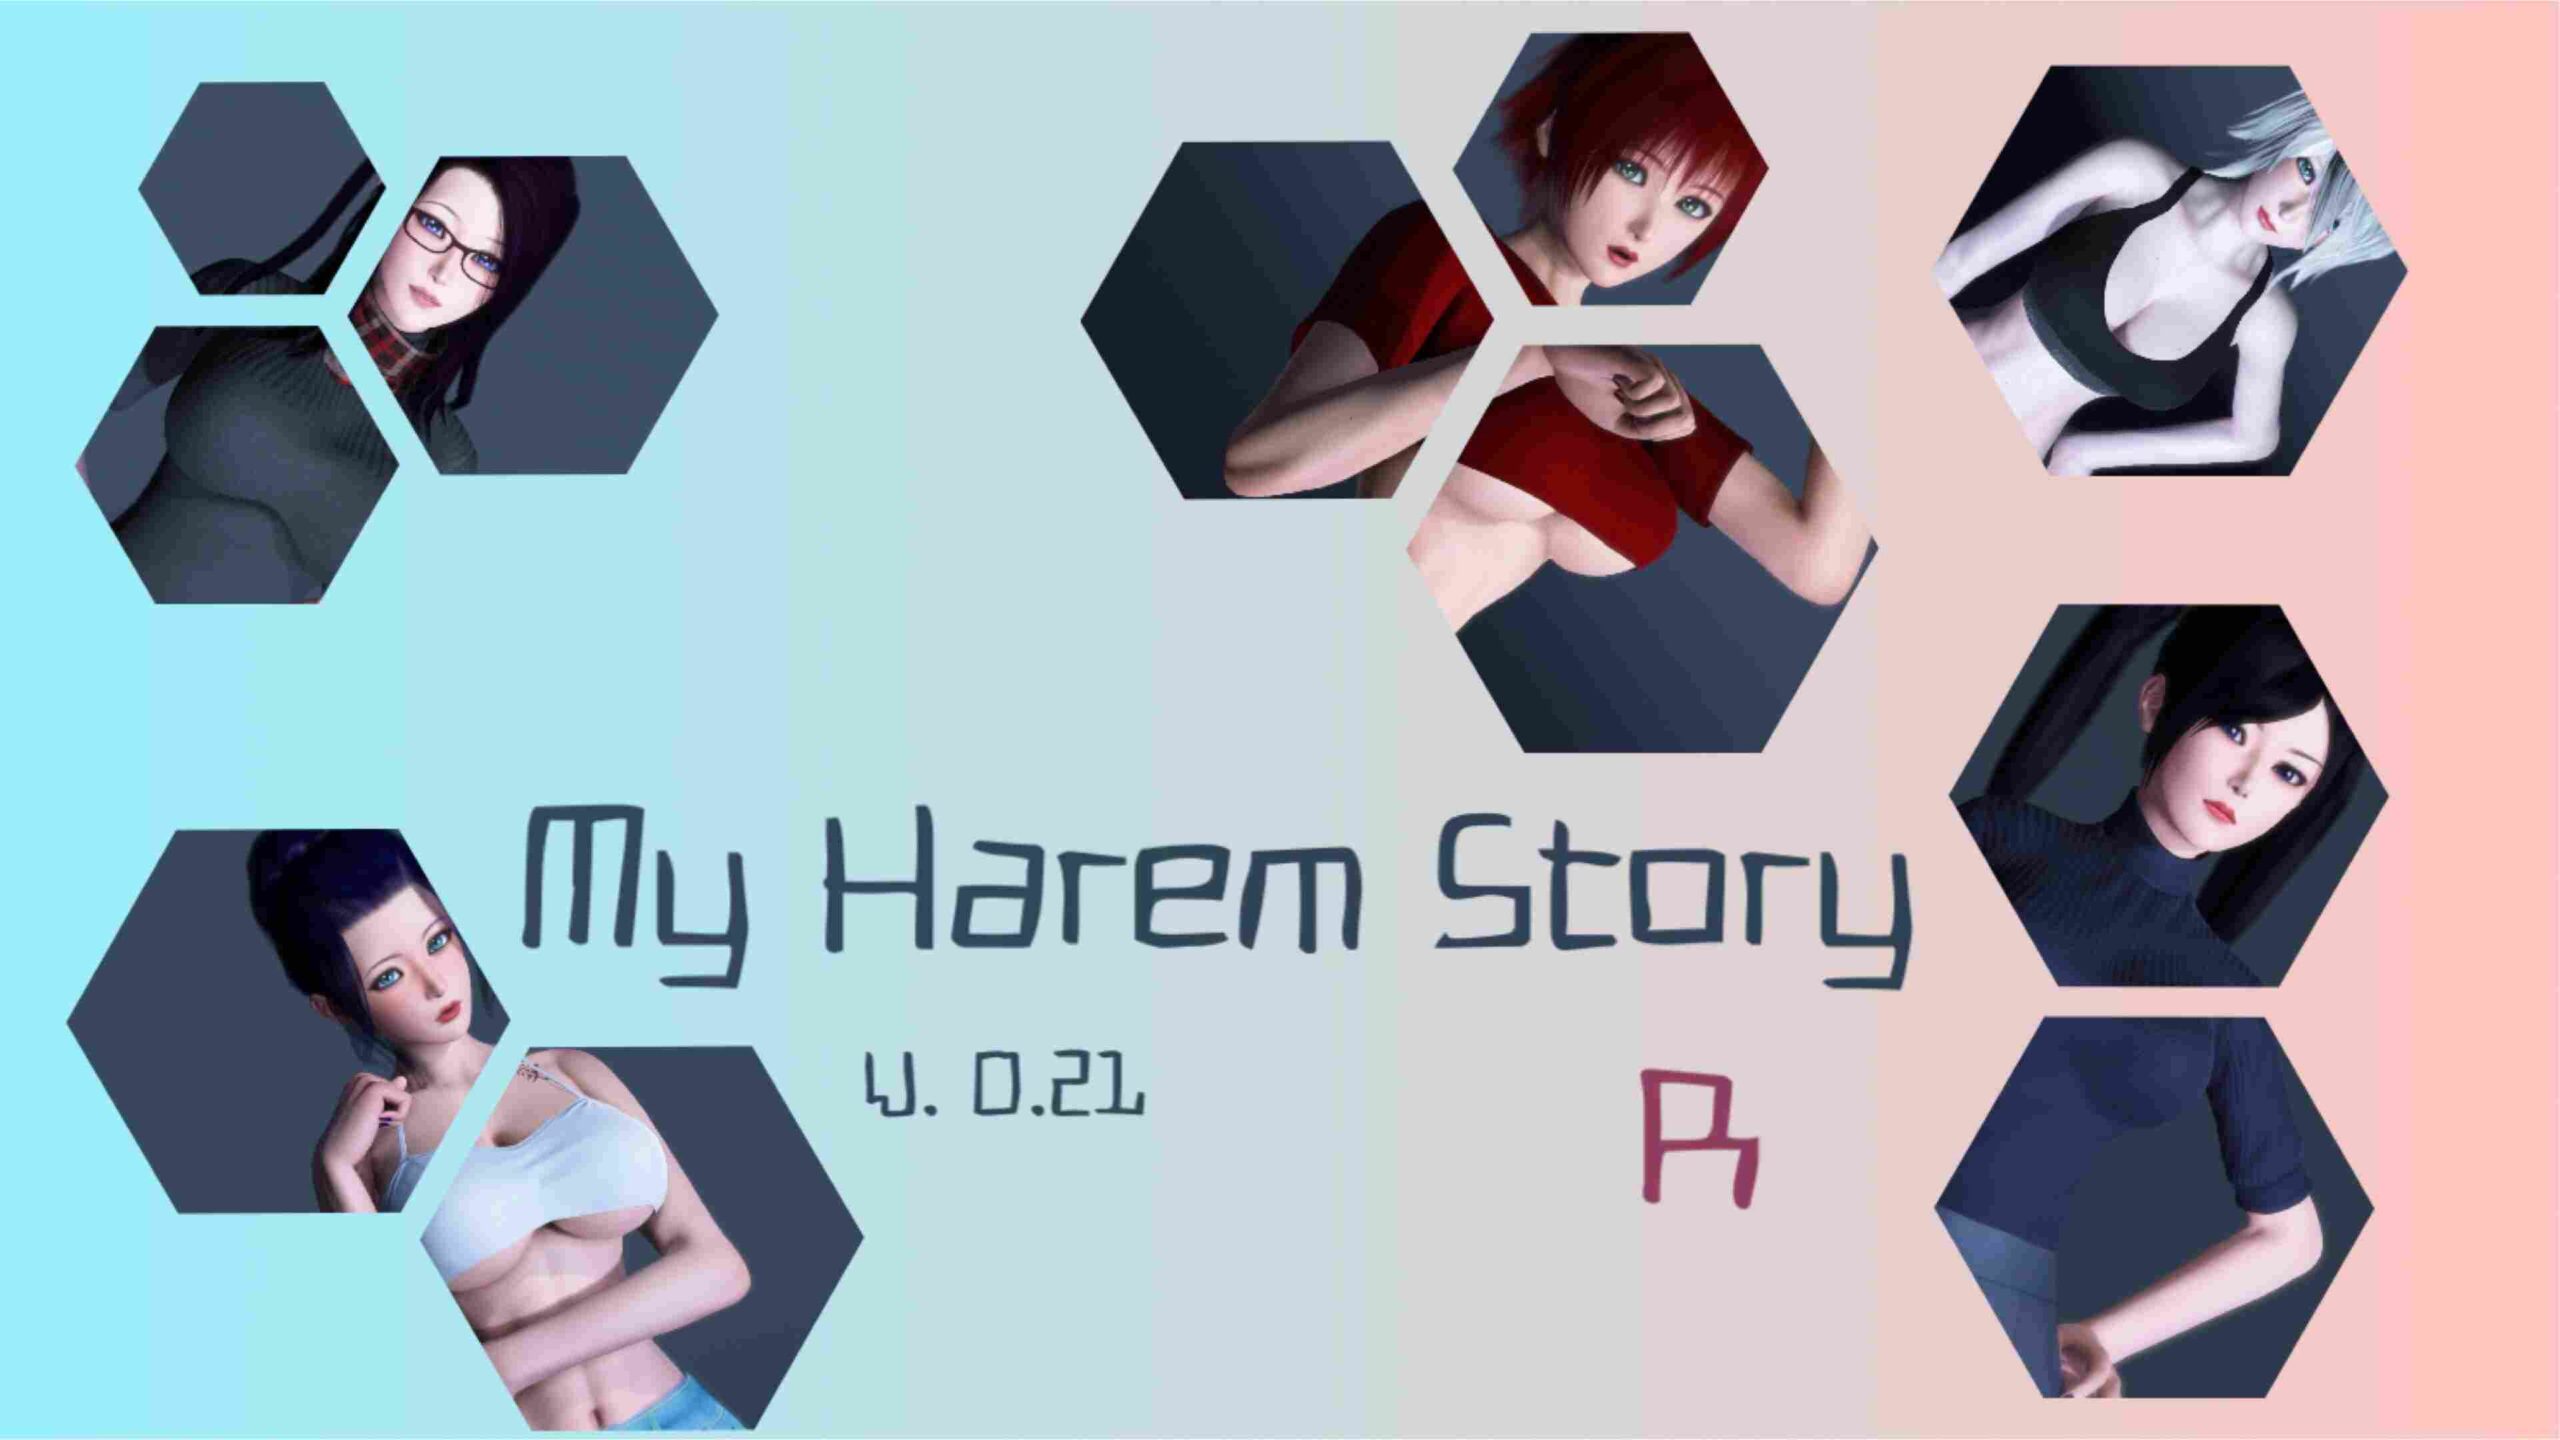 Harem stories